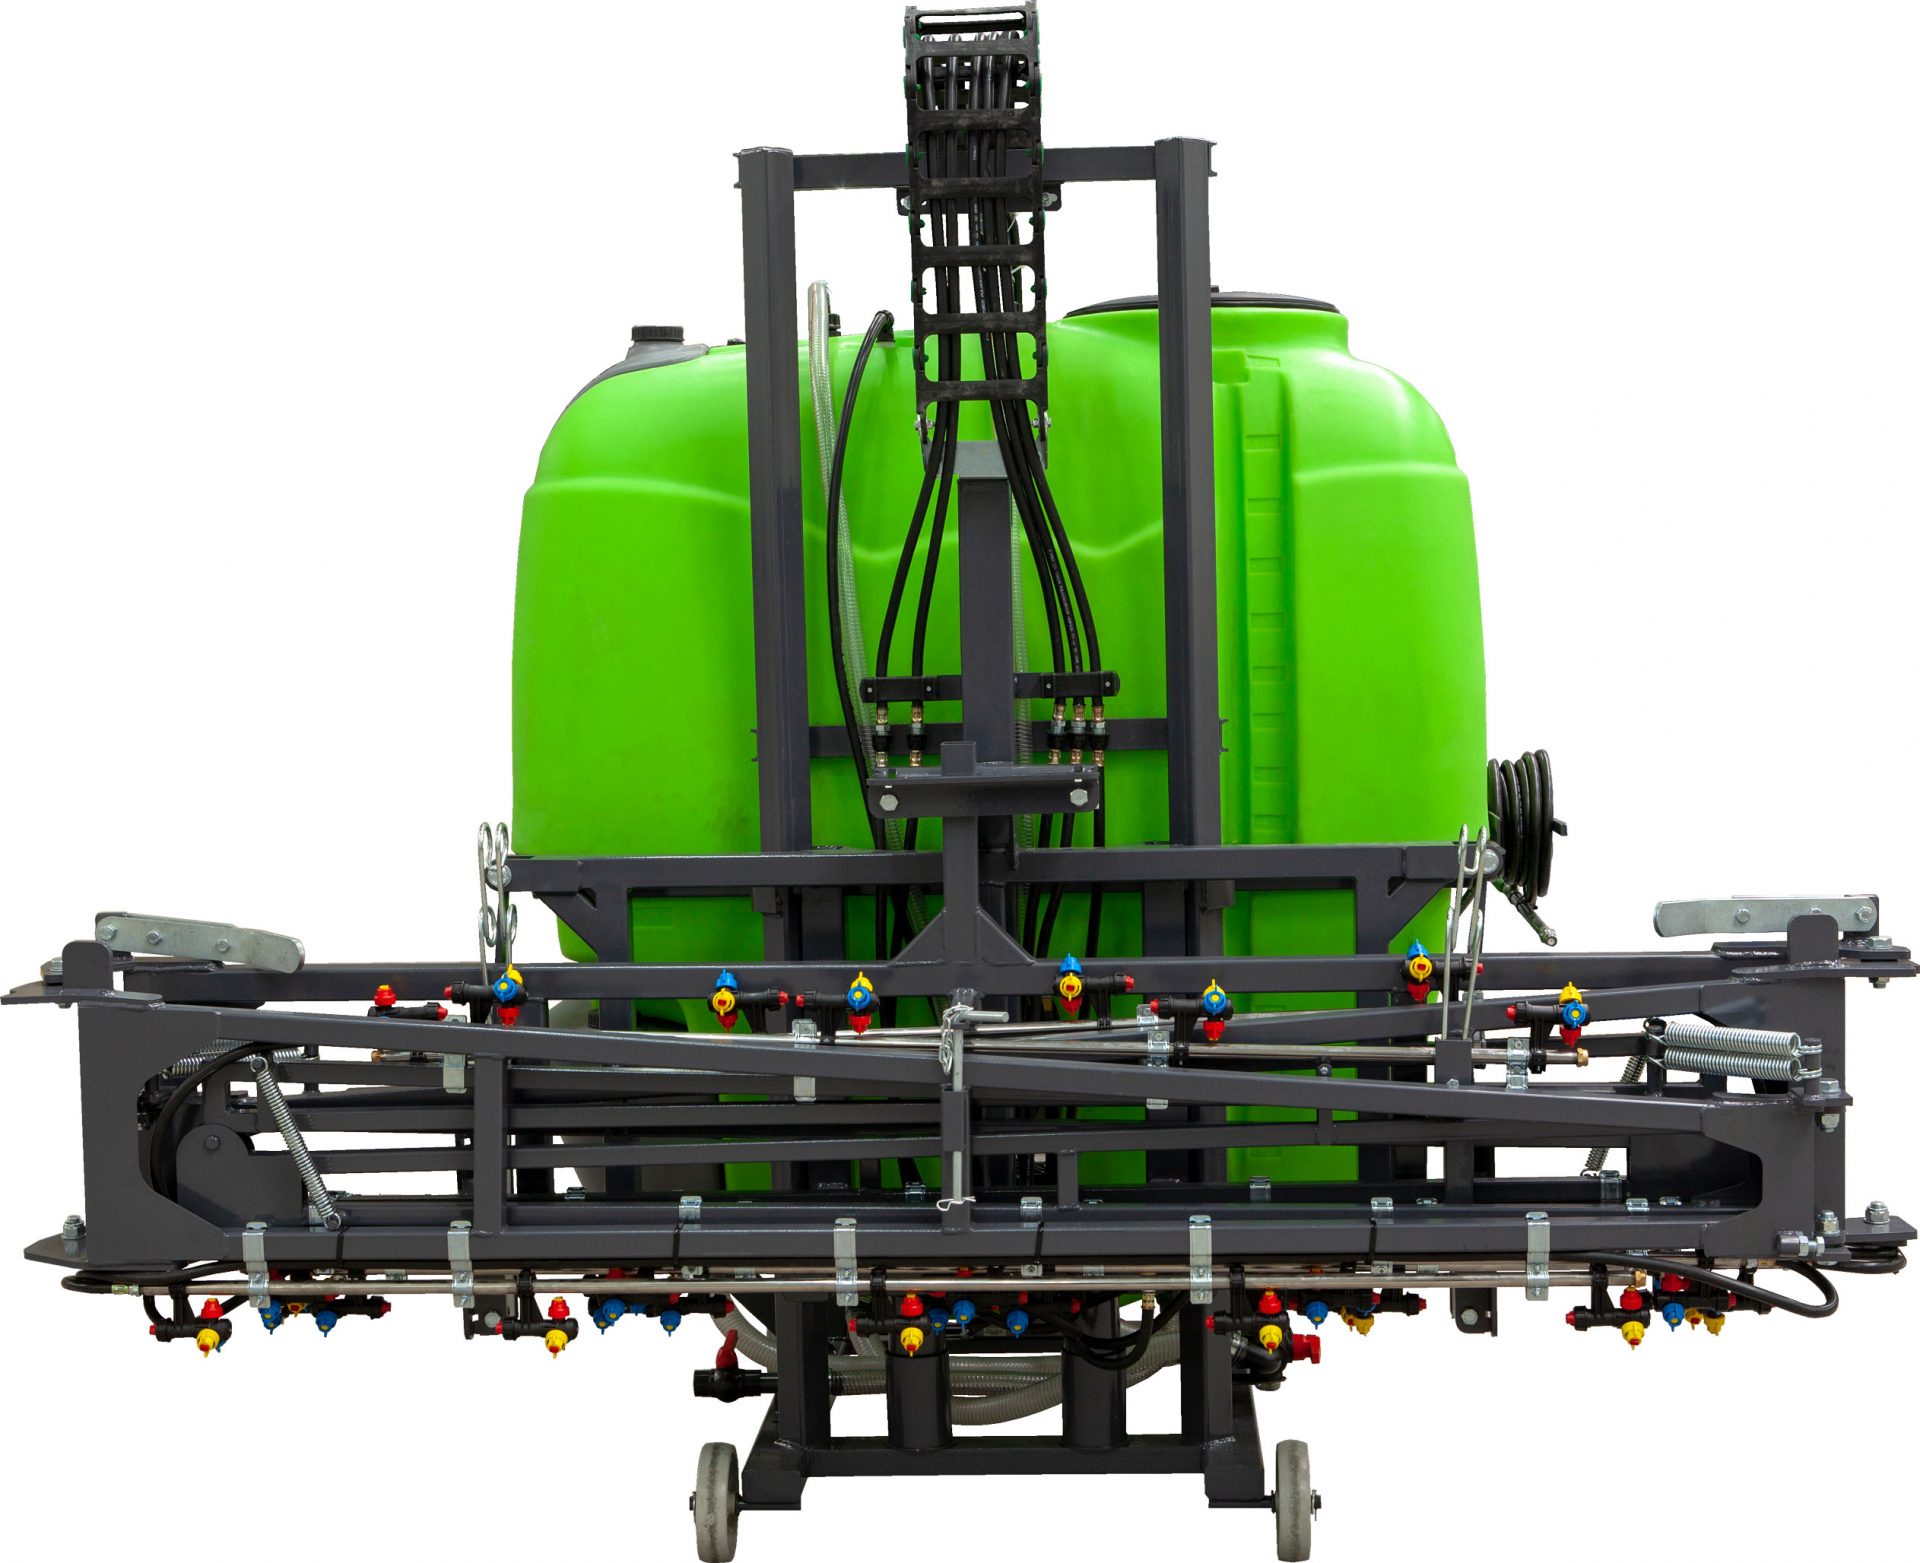 Pulvérisateur agricole Aspergo - Agrolead Agricultural Machines